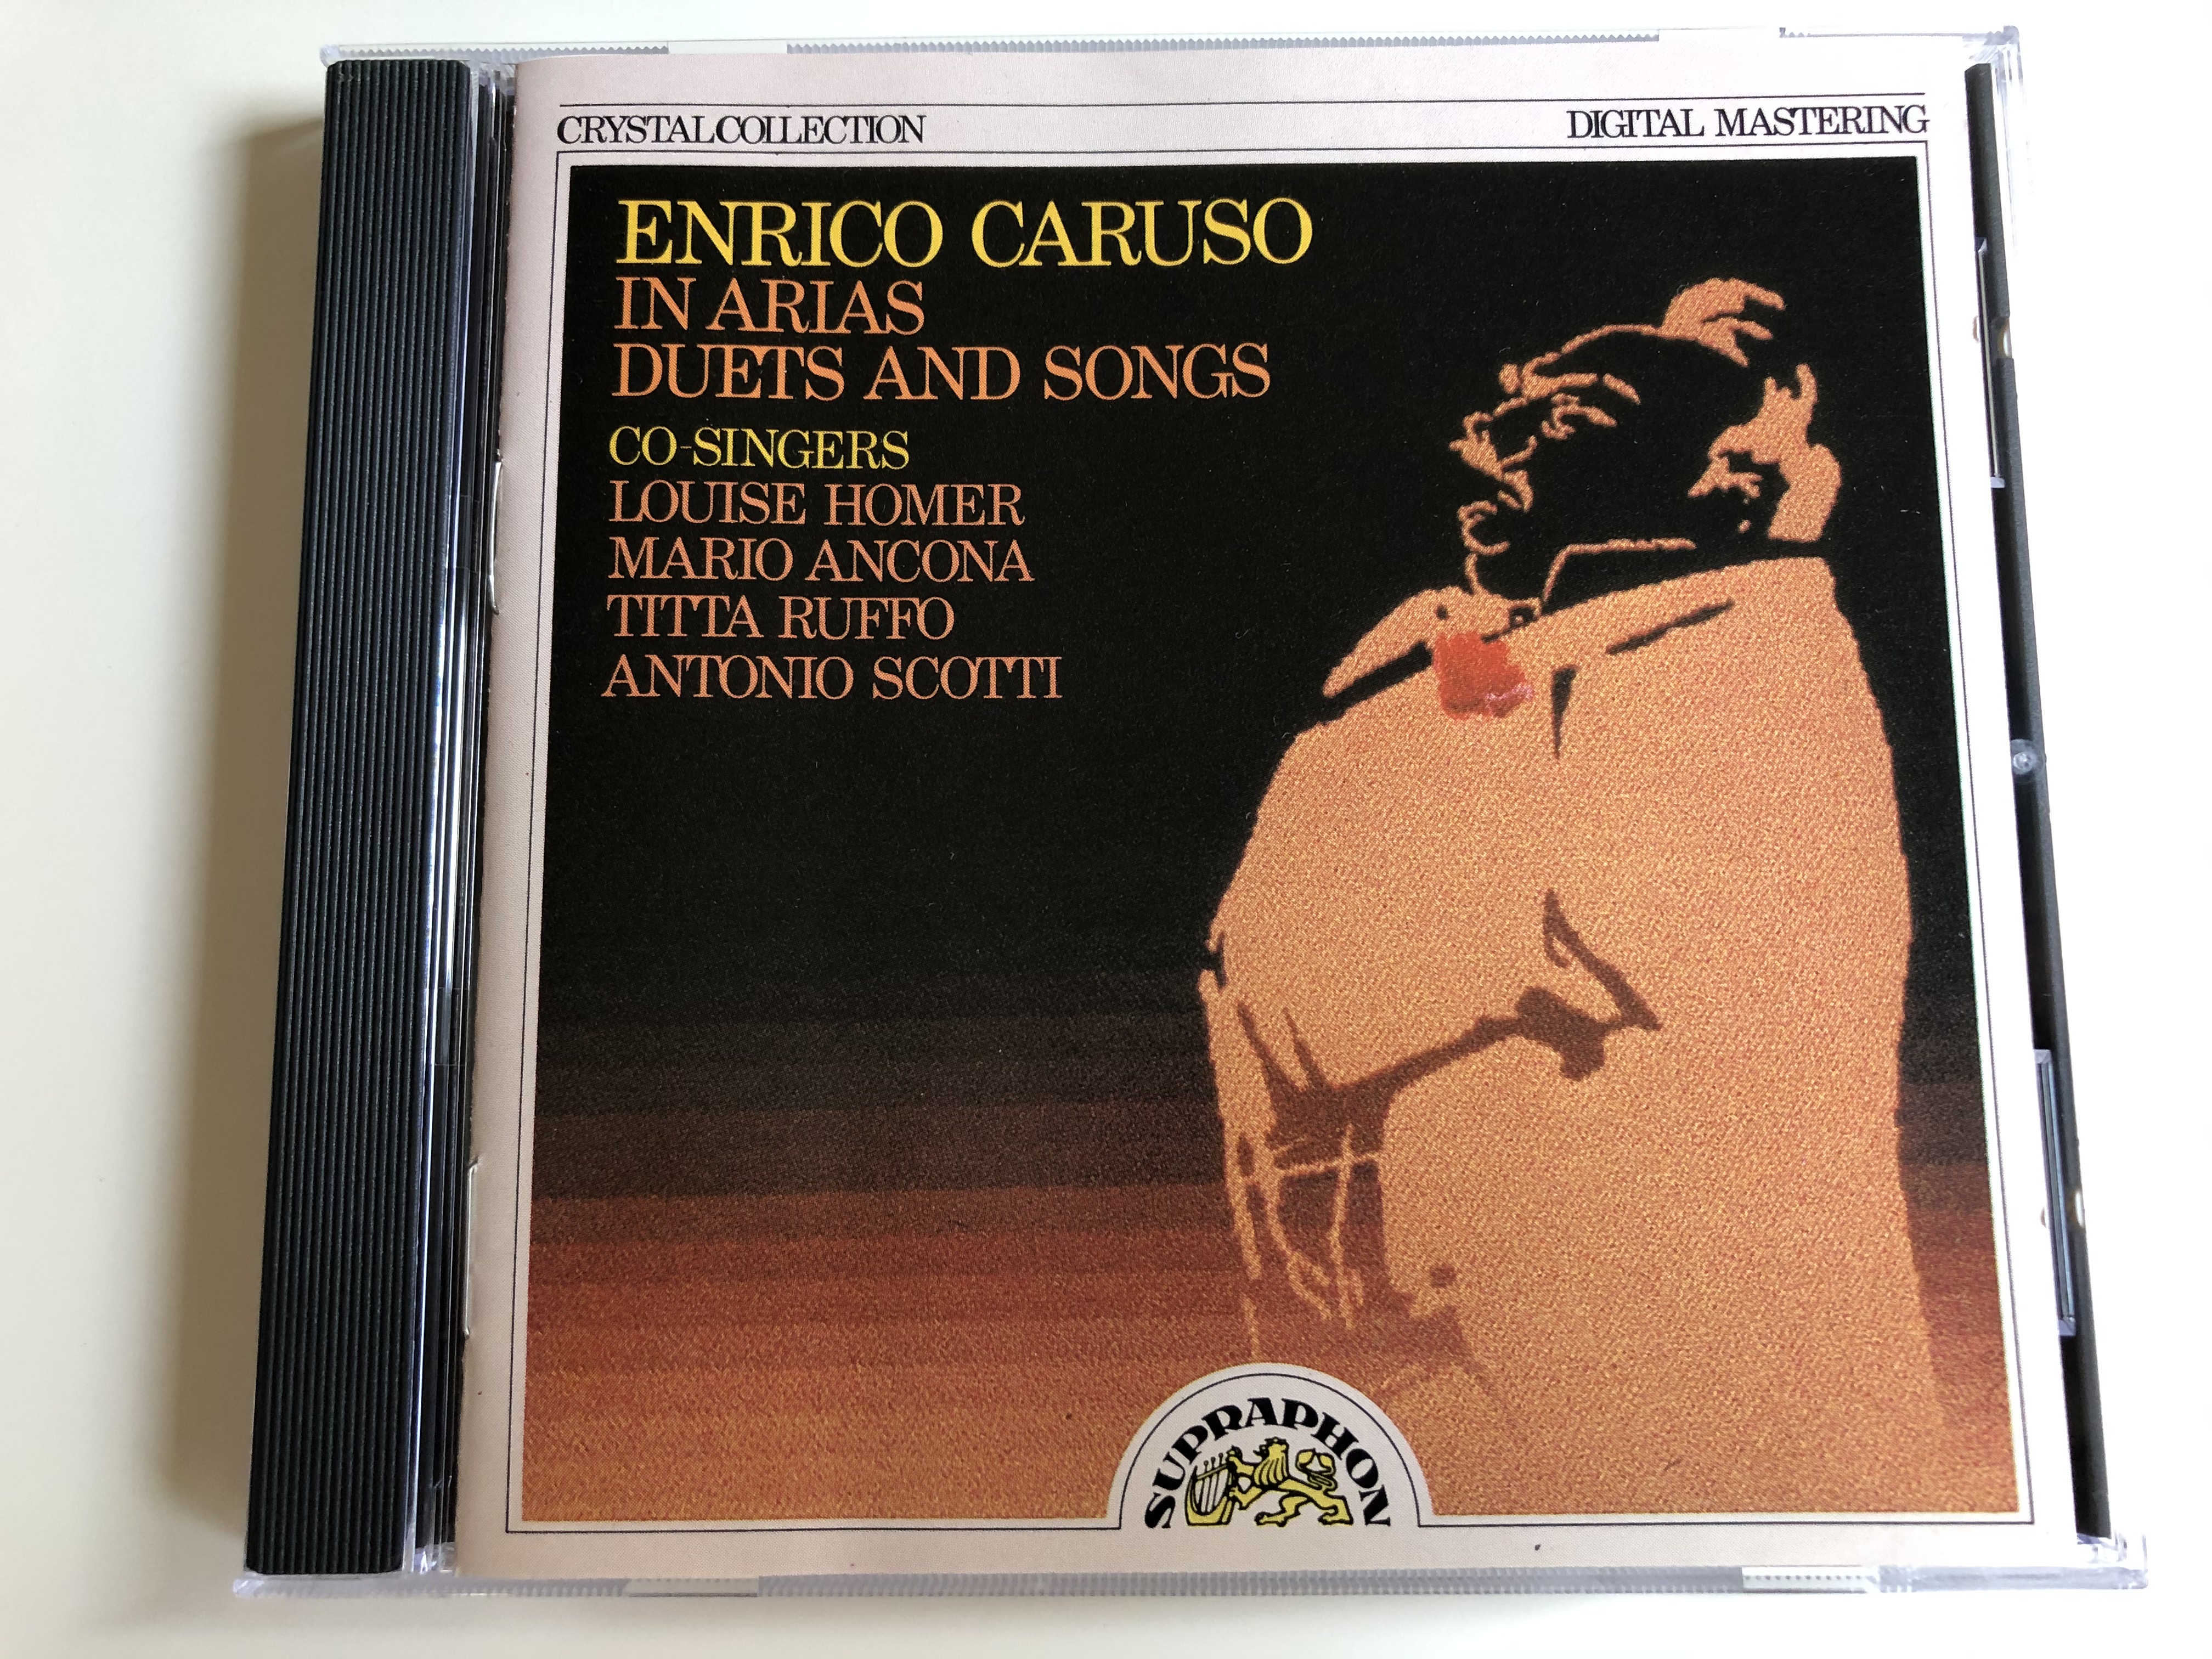 enrico-caruso-in-arias-duets-and-songs-co-singers-louise-homer-mario-ancona-titta-ruffo-antonio-scotti-supraphon-audio-cd-1988-11-0618-2-601-1-.jpg